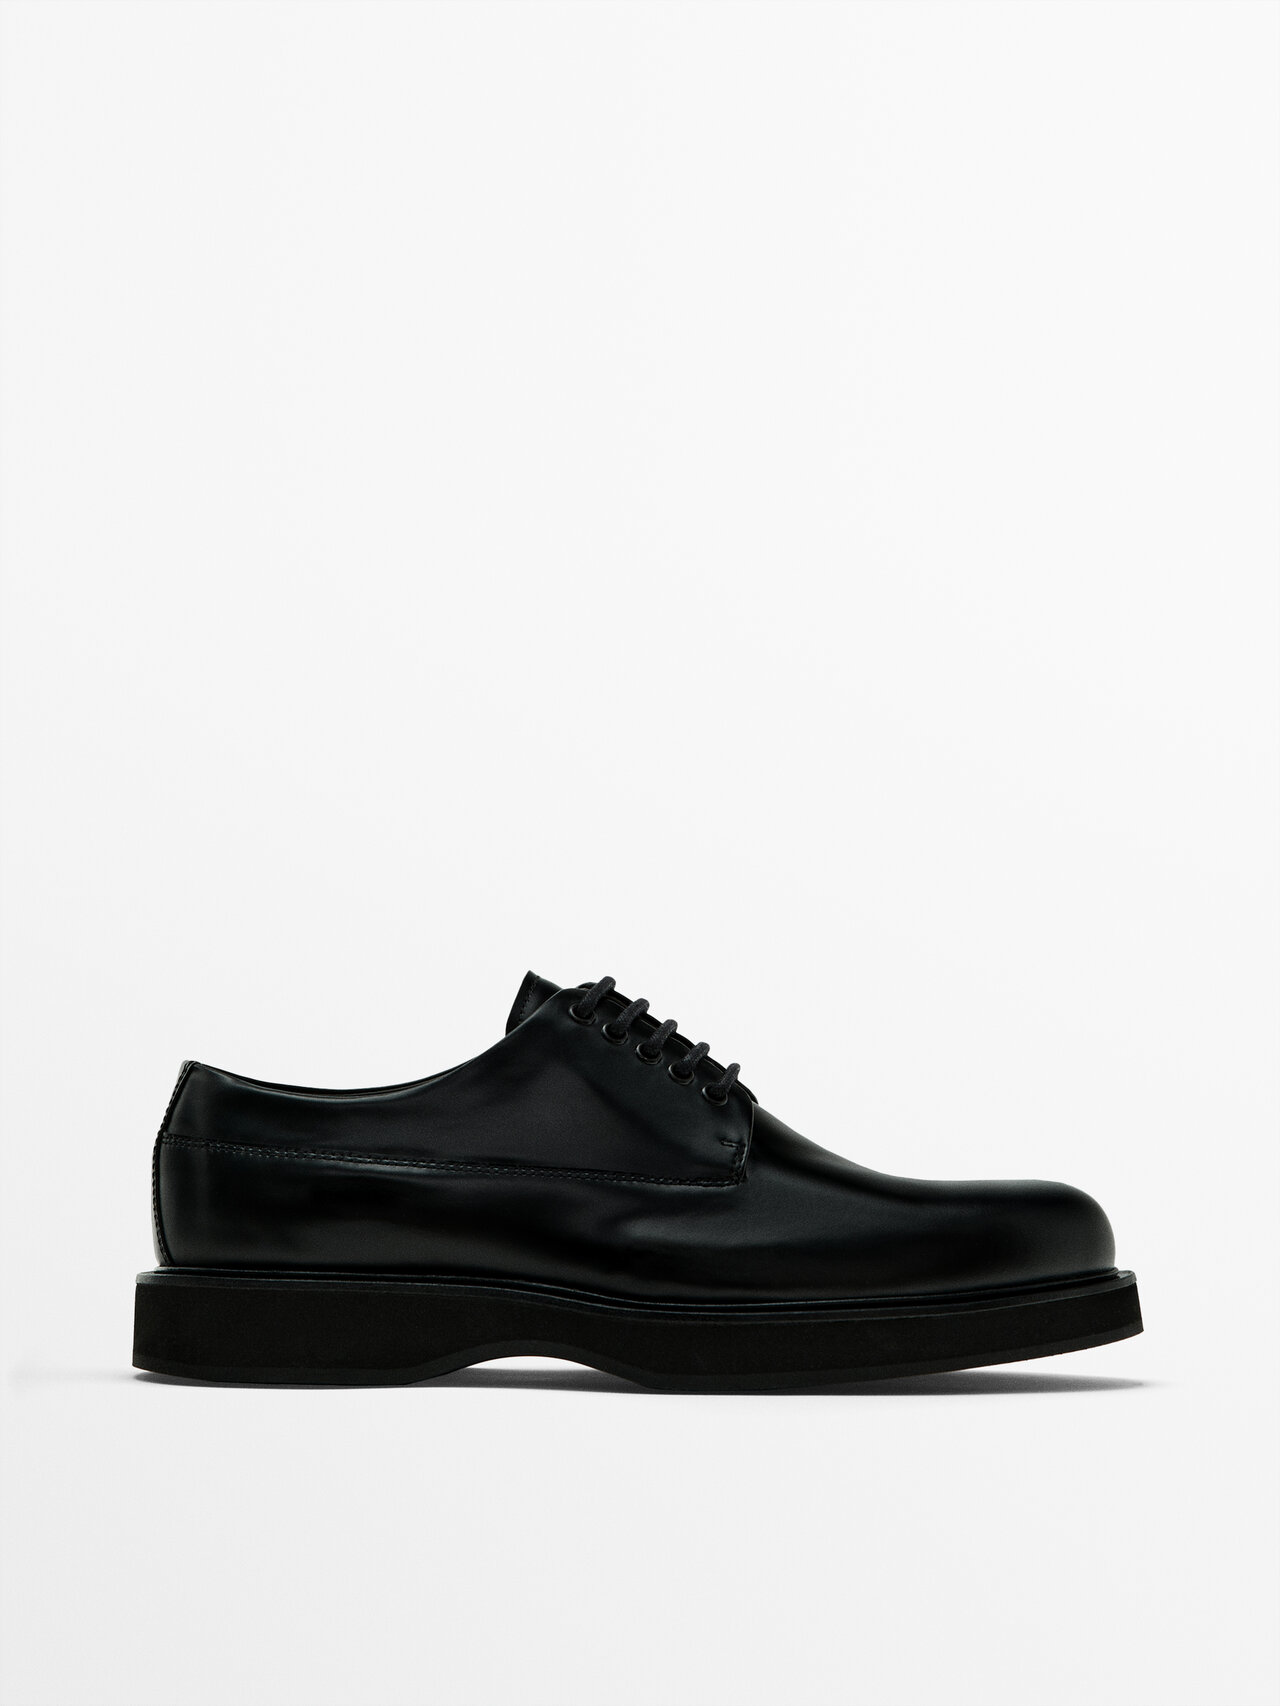 Massimo Dutti Black Lace-up Shoes